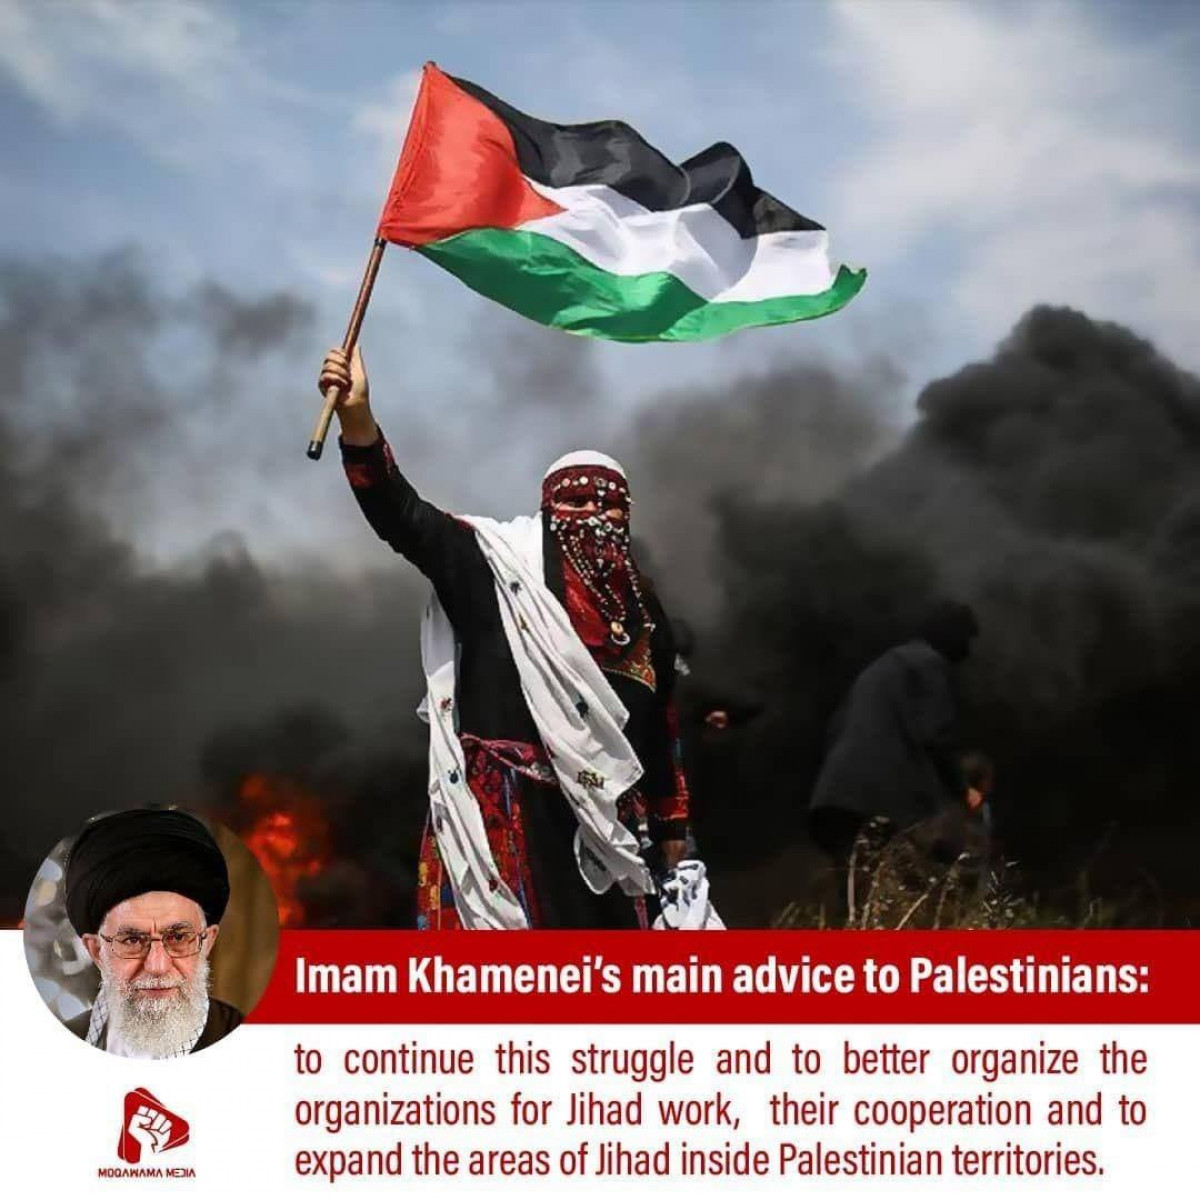 Imam Khamenei’s main advice to Palestinians: